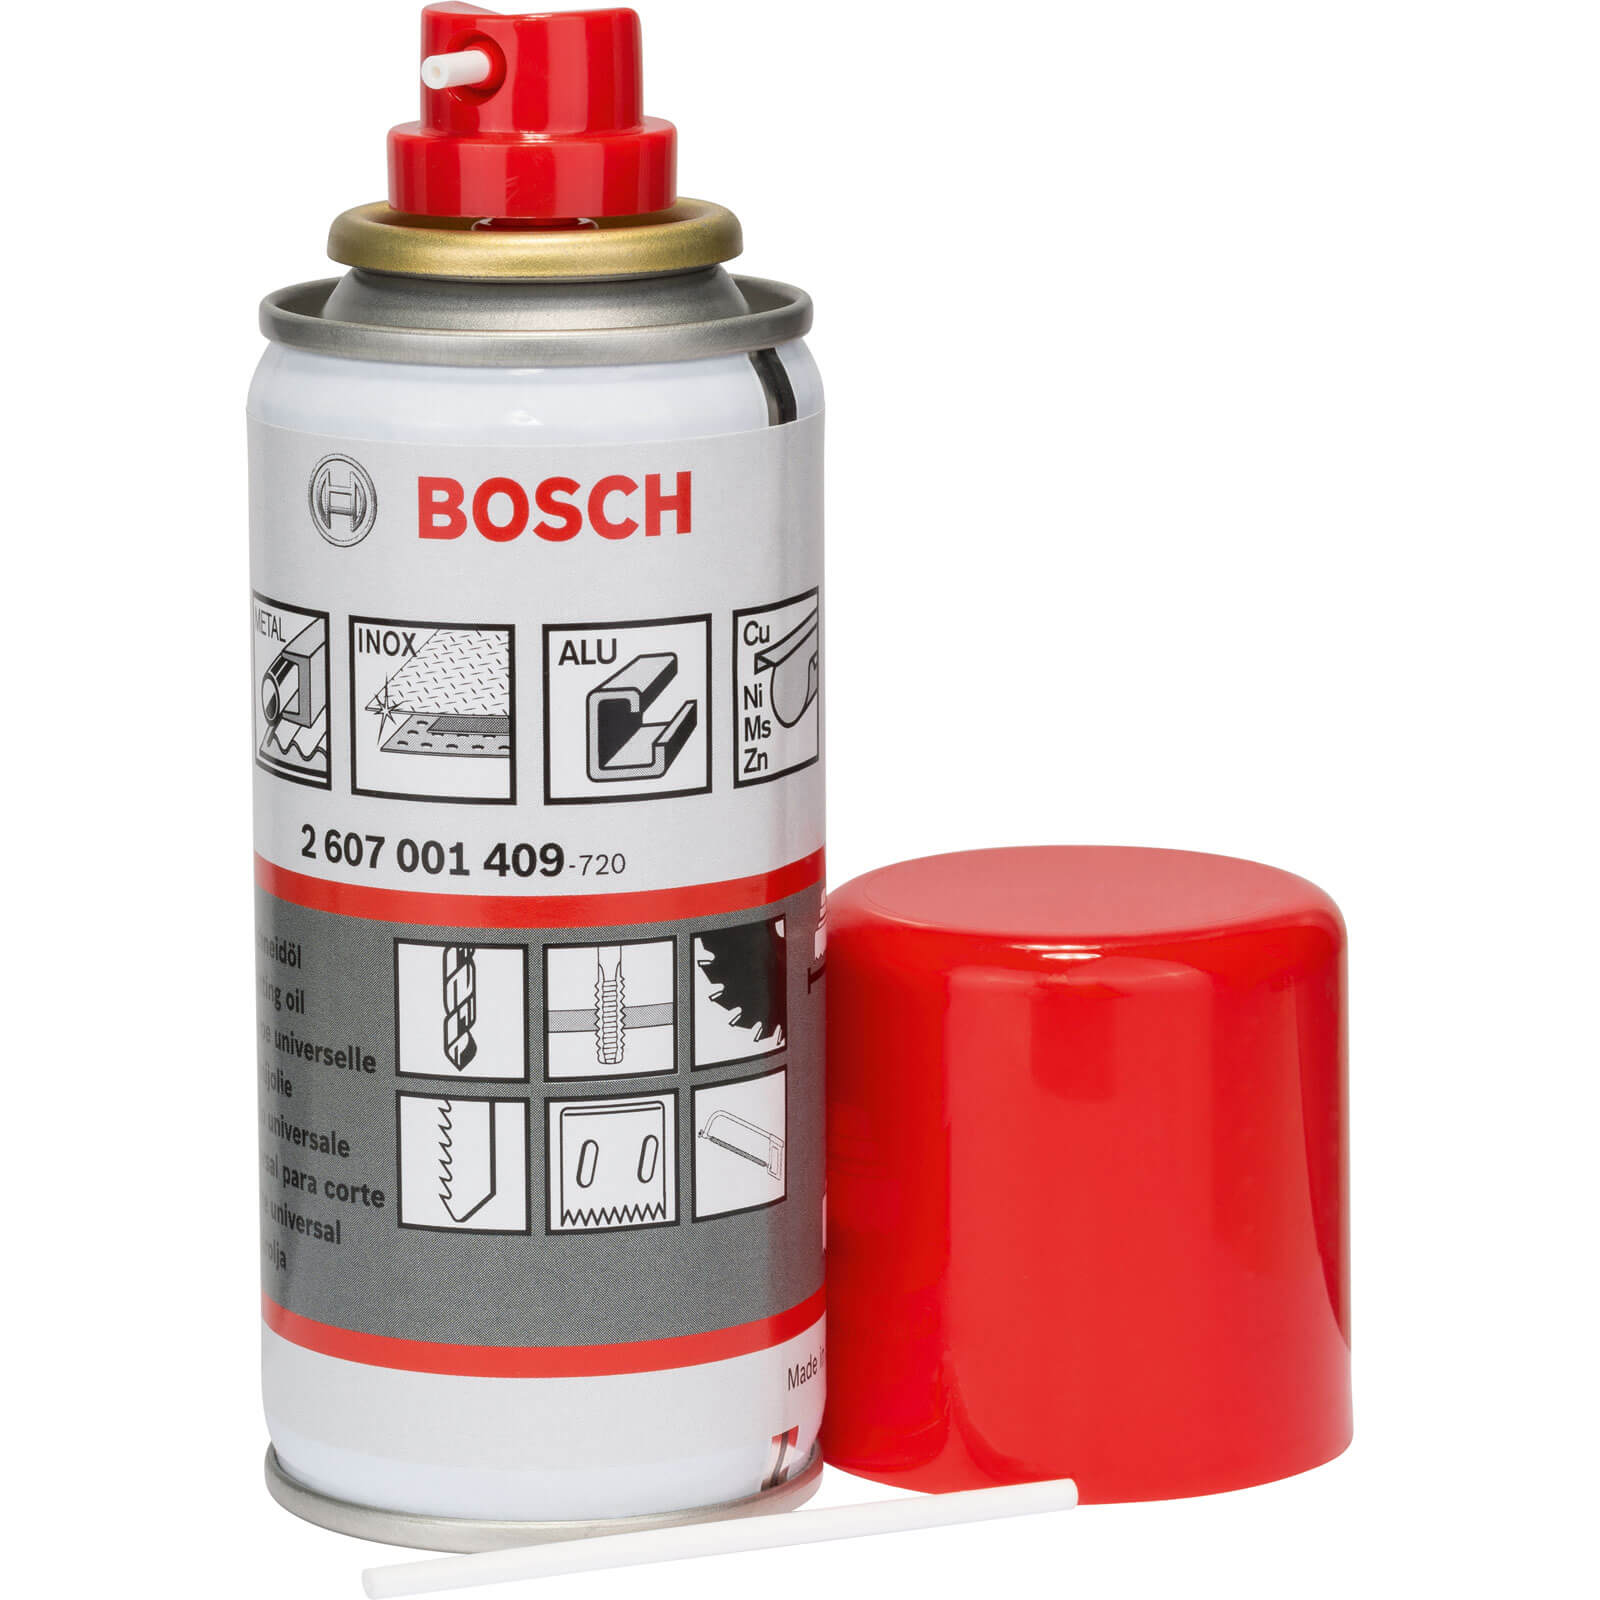 Bosch Universal Cutting Oil 100ml